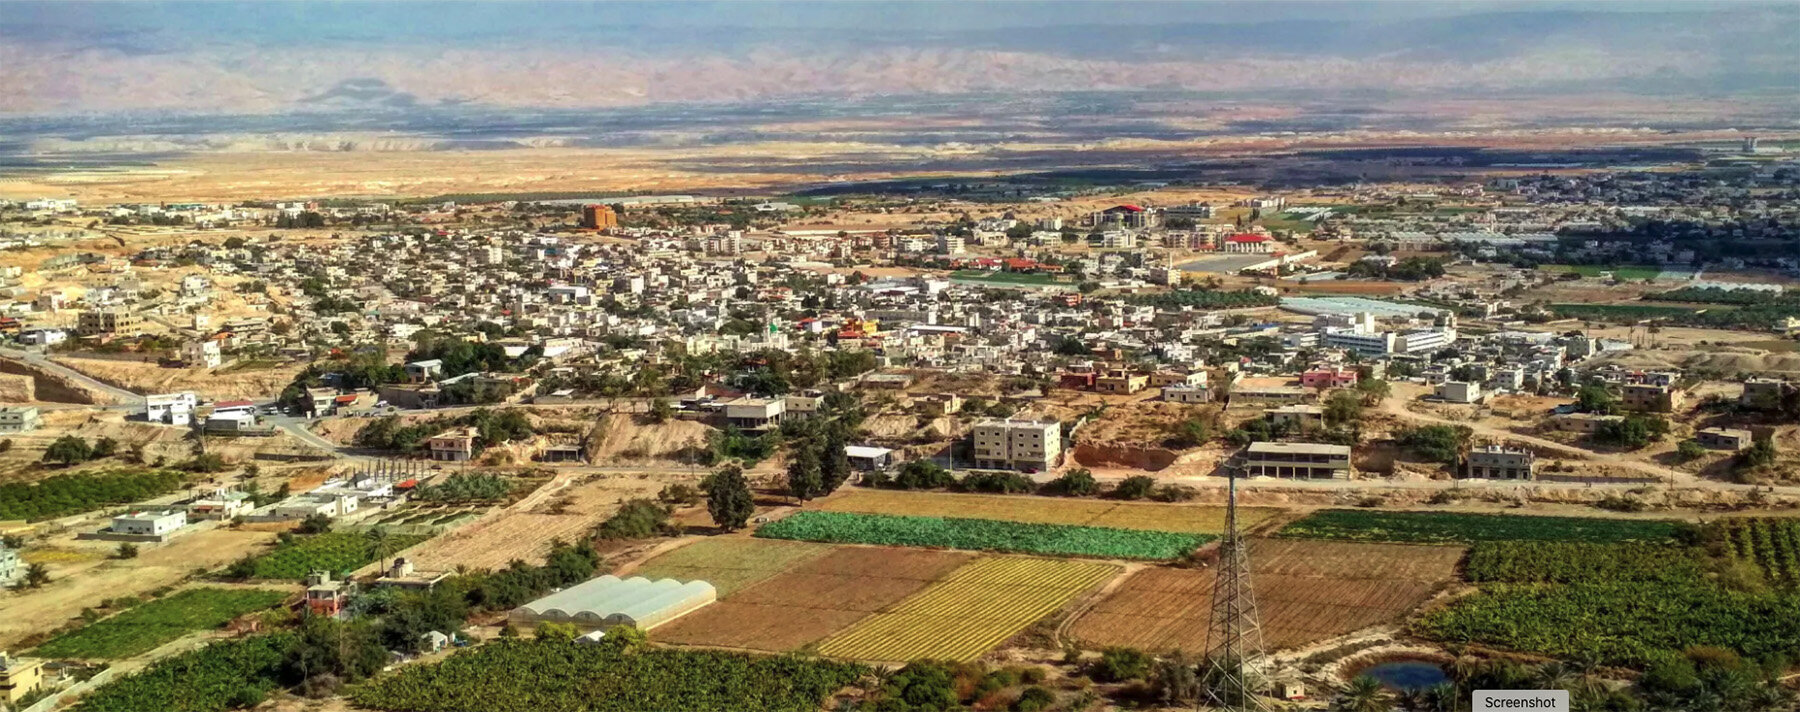 Jericho, Palestine (photo by Chirag Dhara).